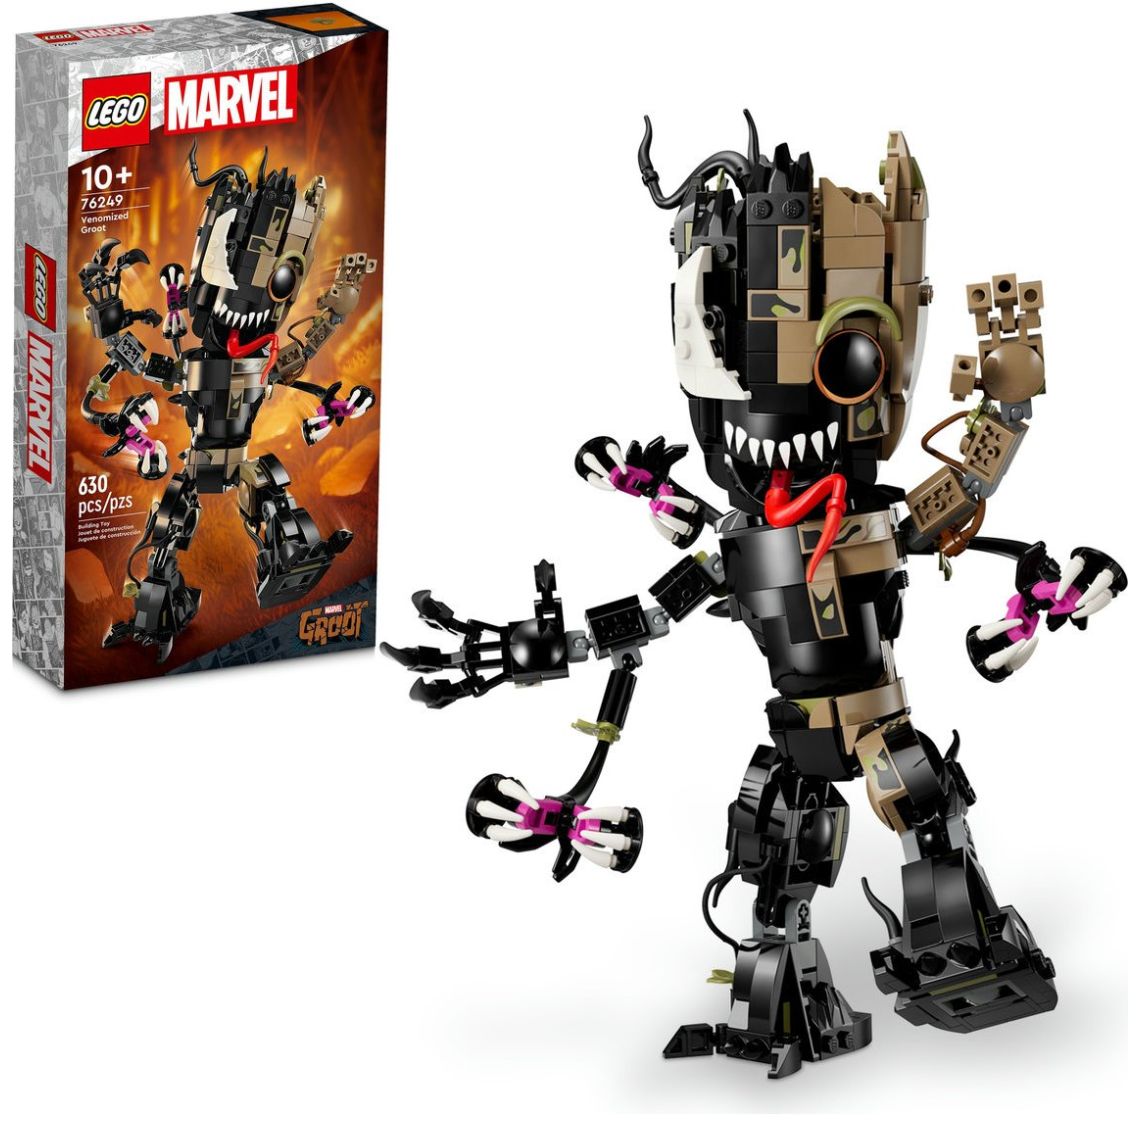 Groot Venomizado Lego Super Heroes Marvel